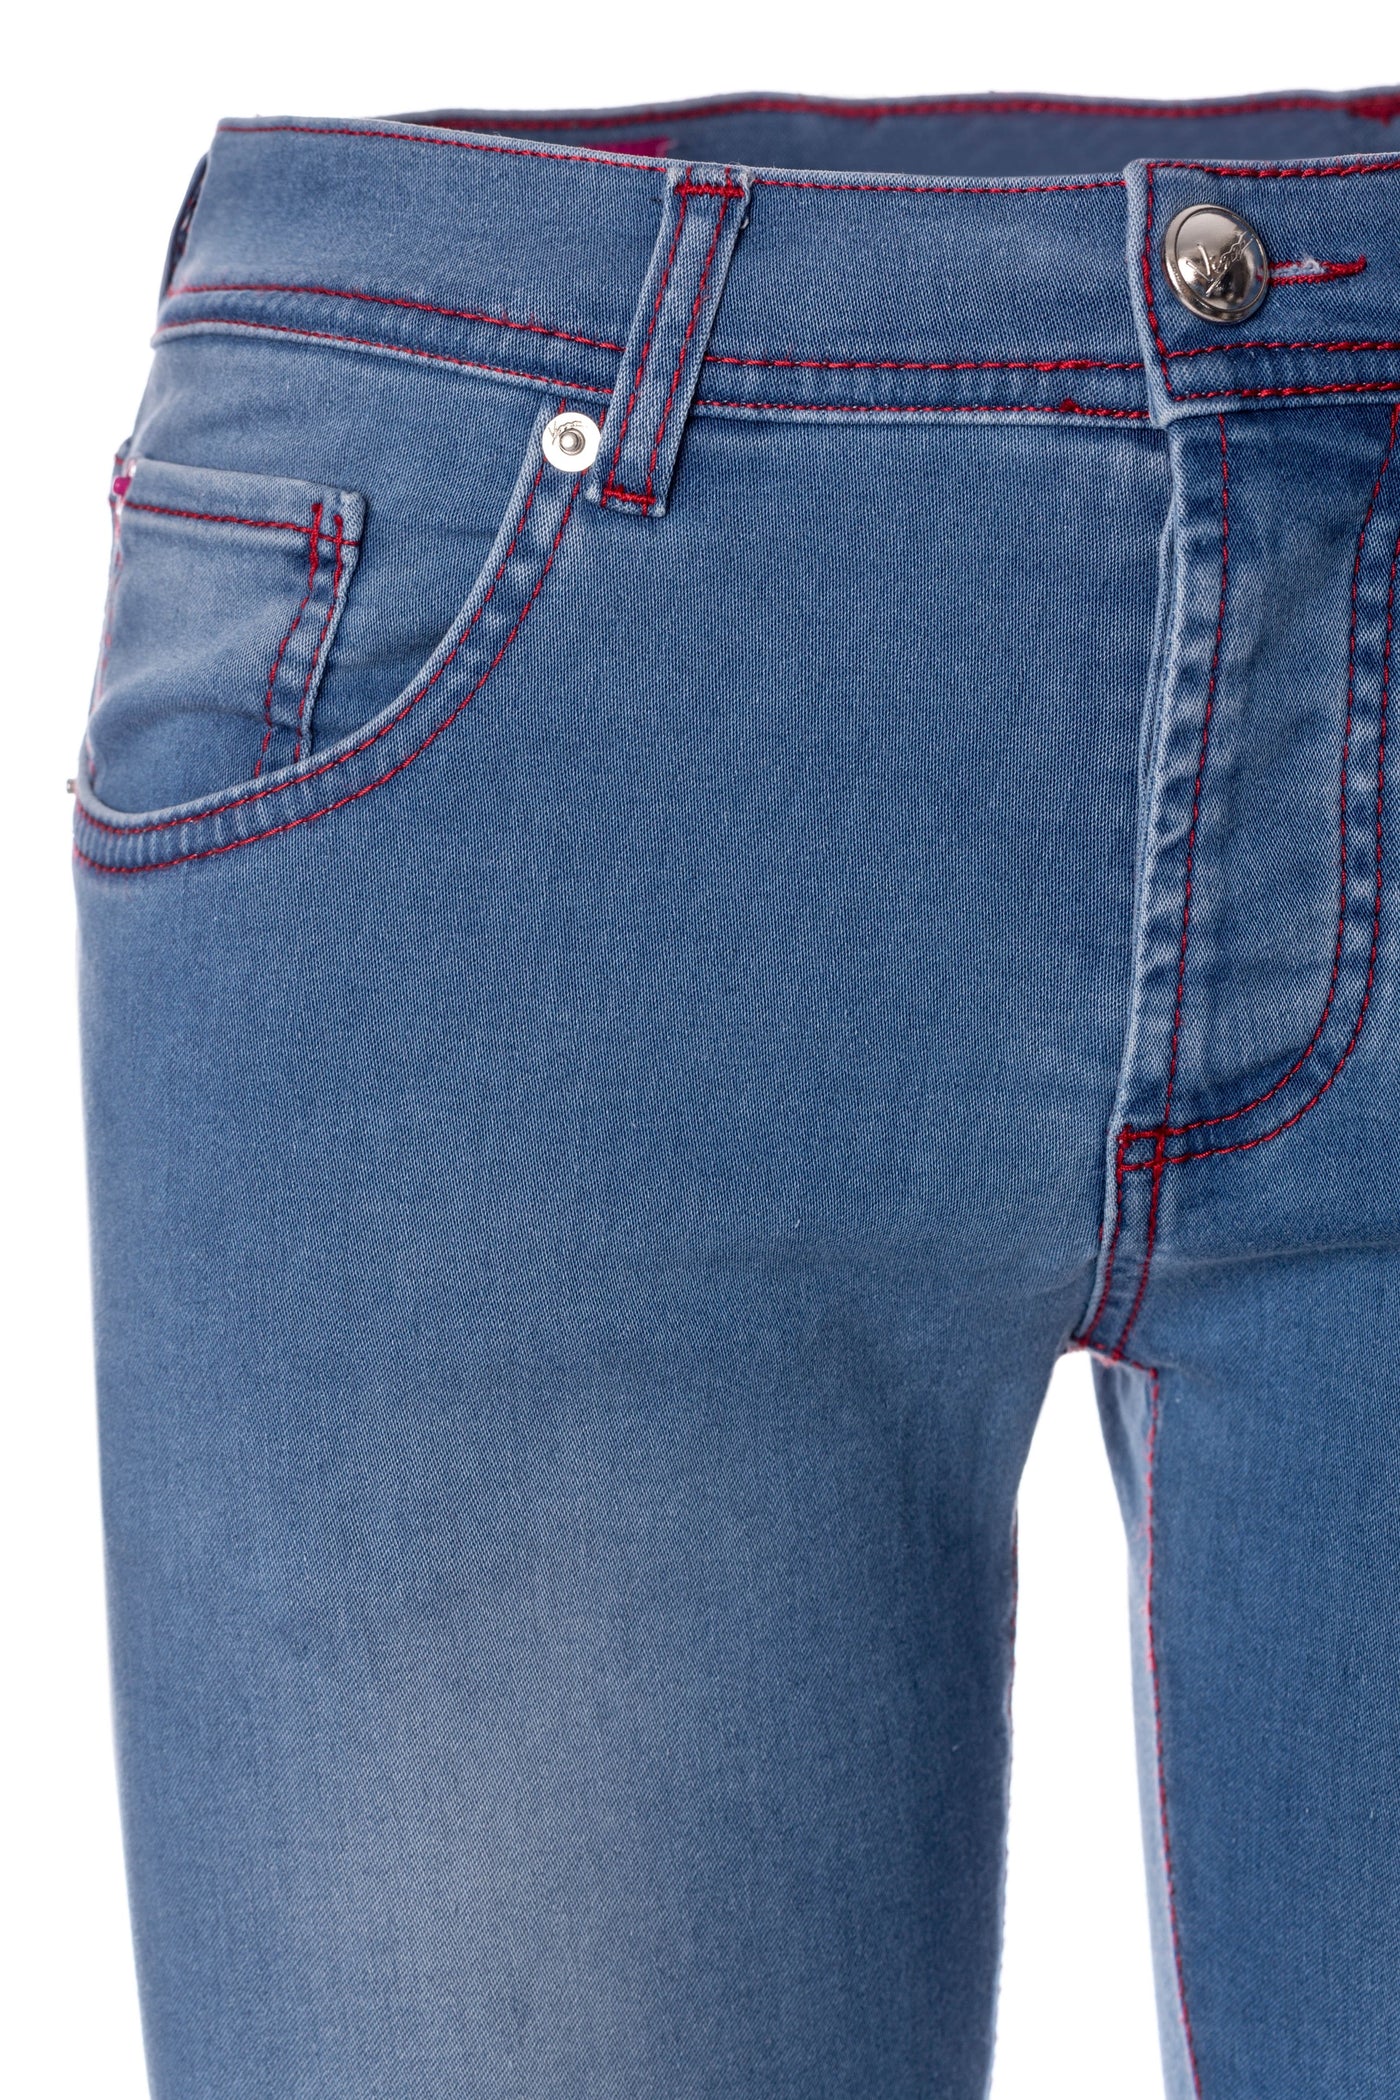 Wedgewood jeans